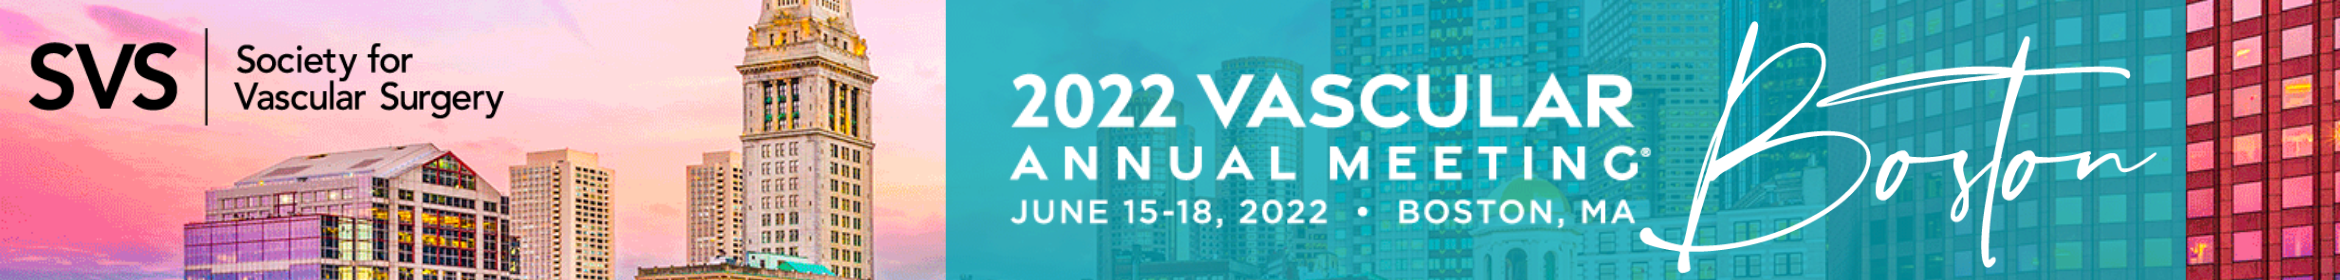 2022 Vascular Annual Meeting Main banner